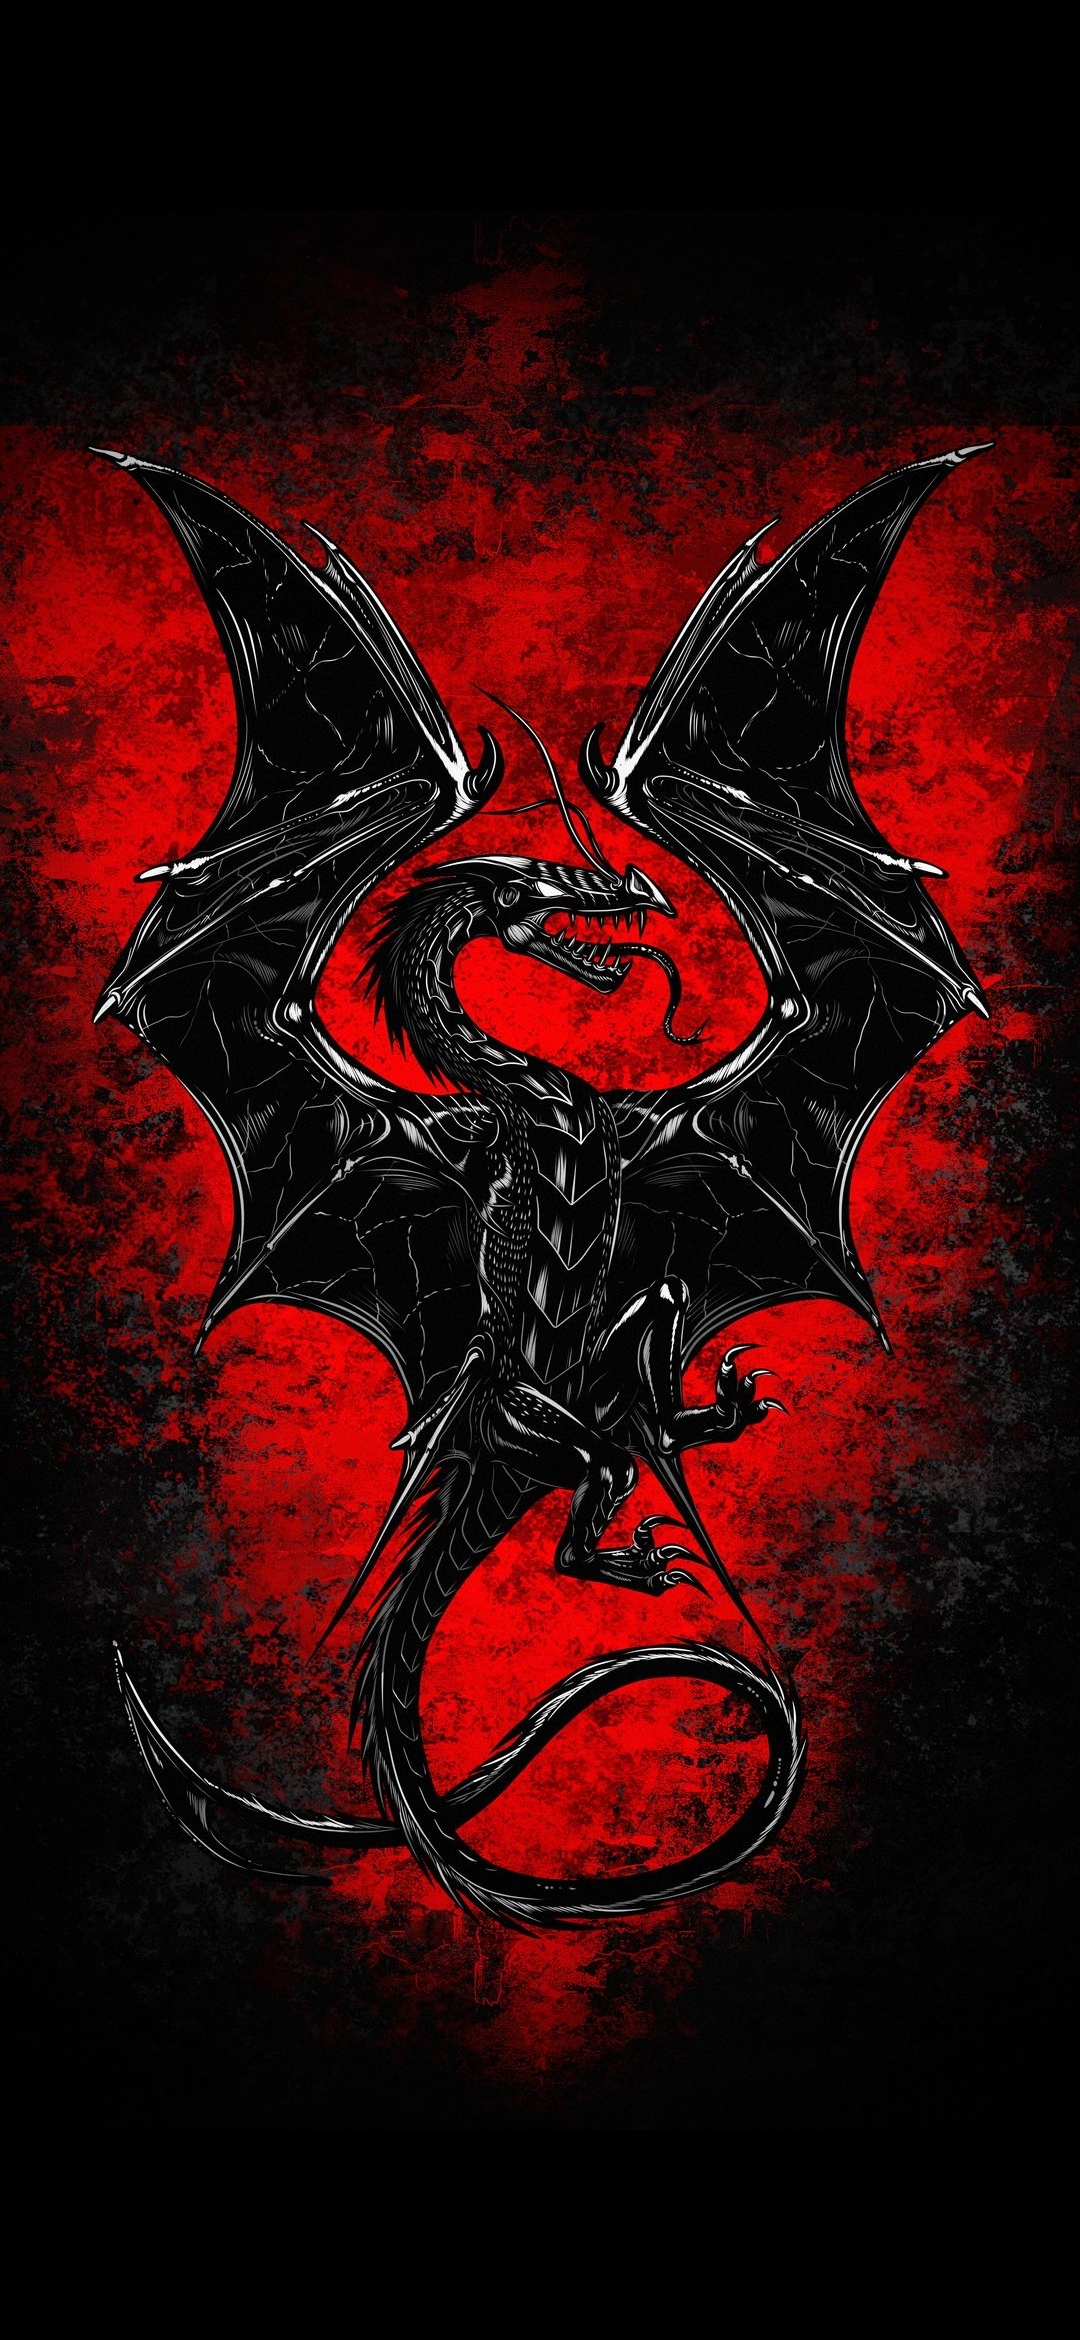 Granblue Fantasy: Relink (Dragon) 4K wallpaper download